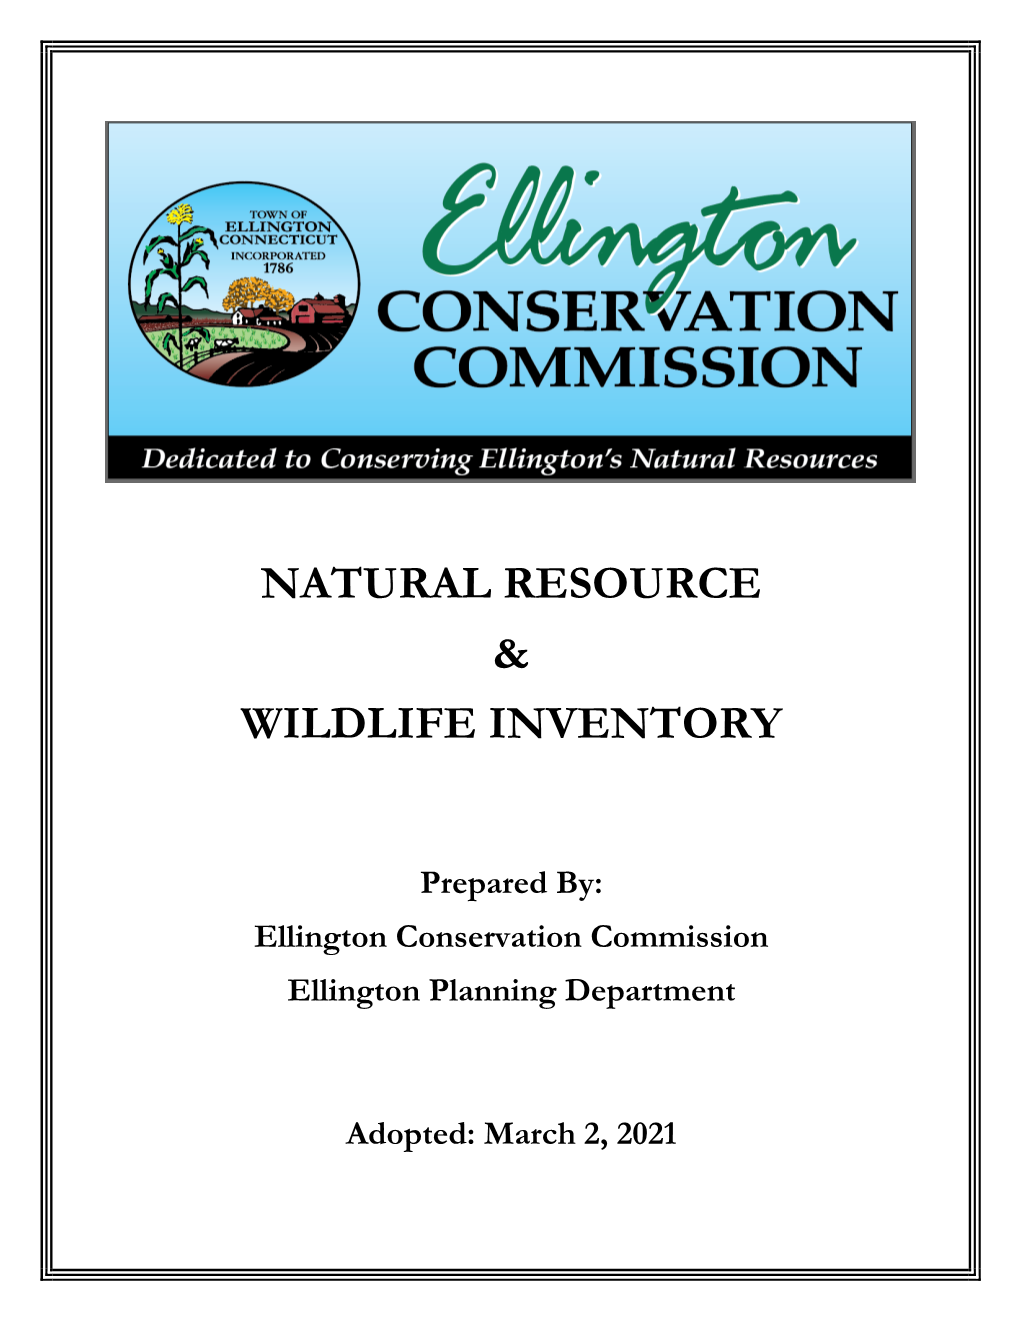 Natural Resource & Wildlife Inventory